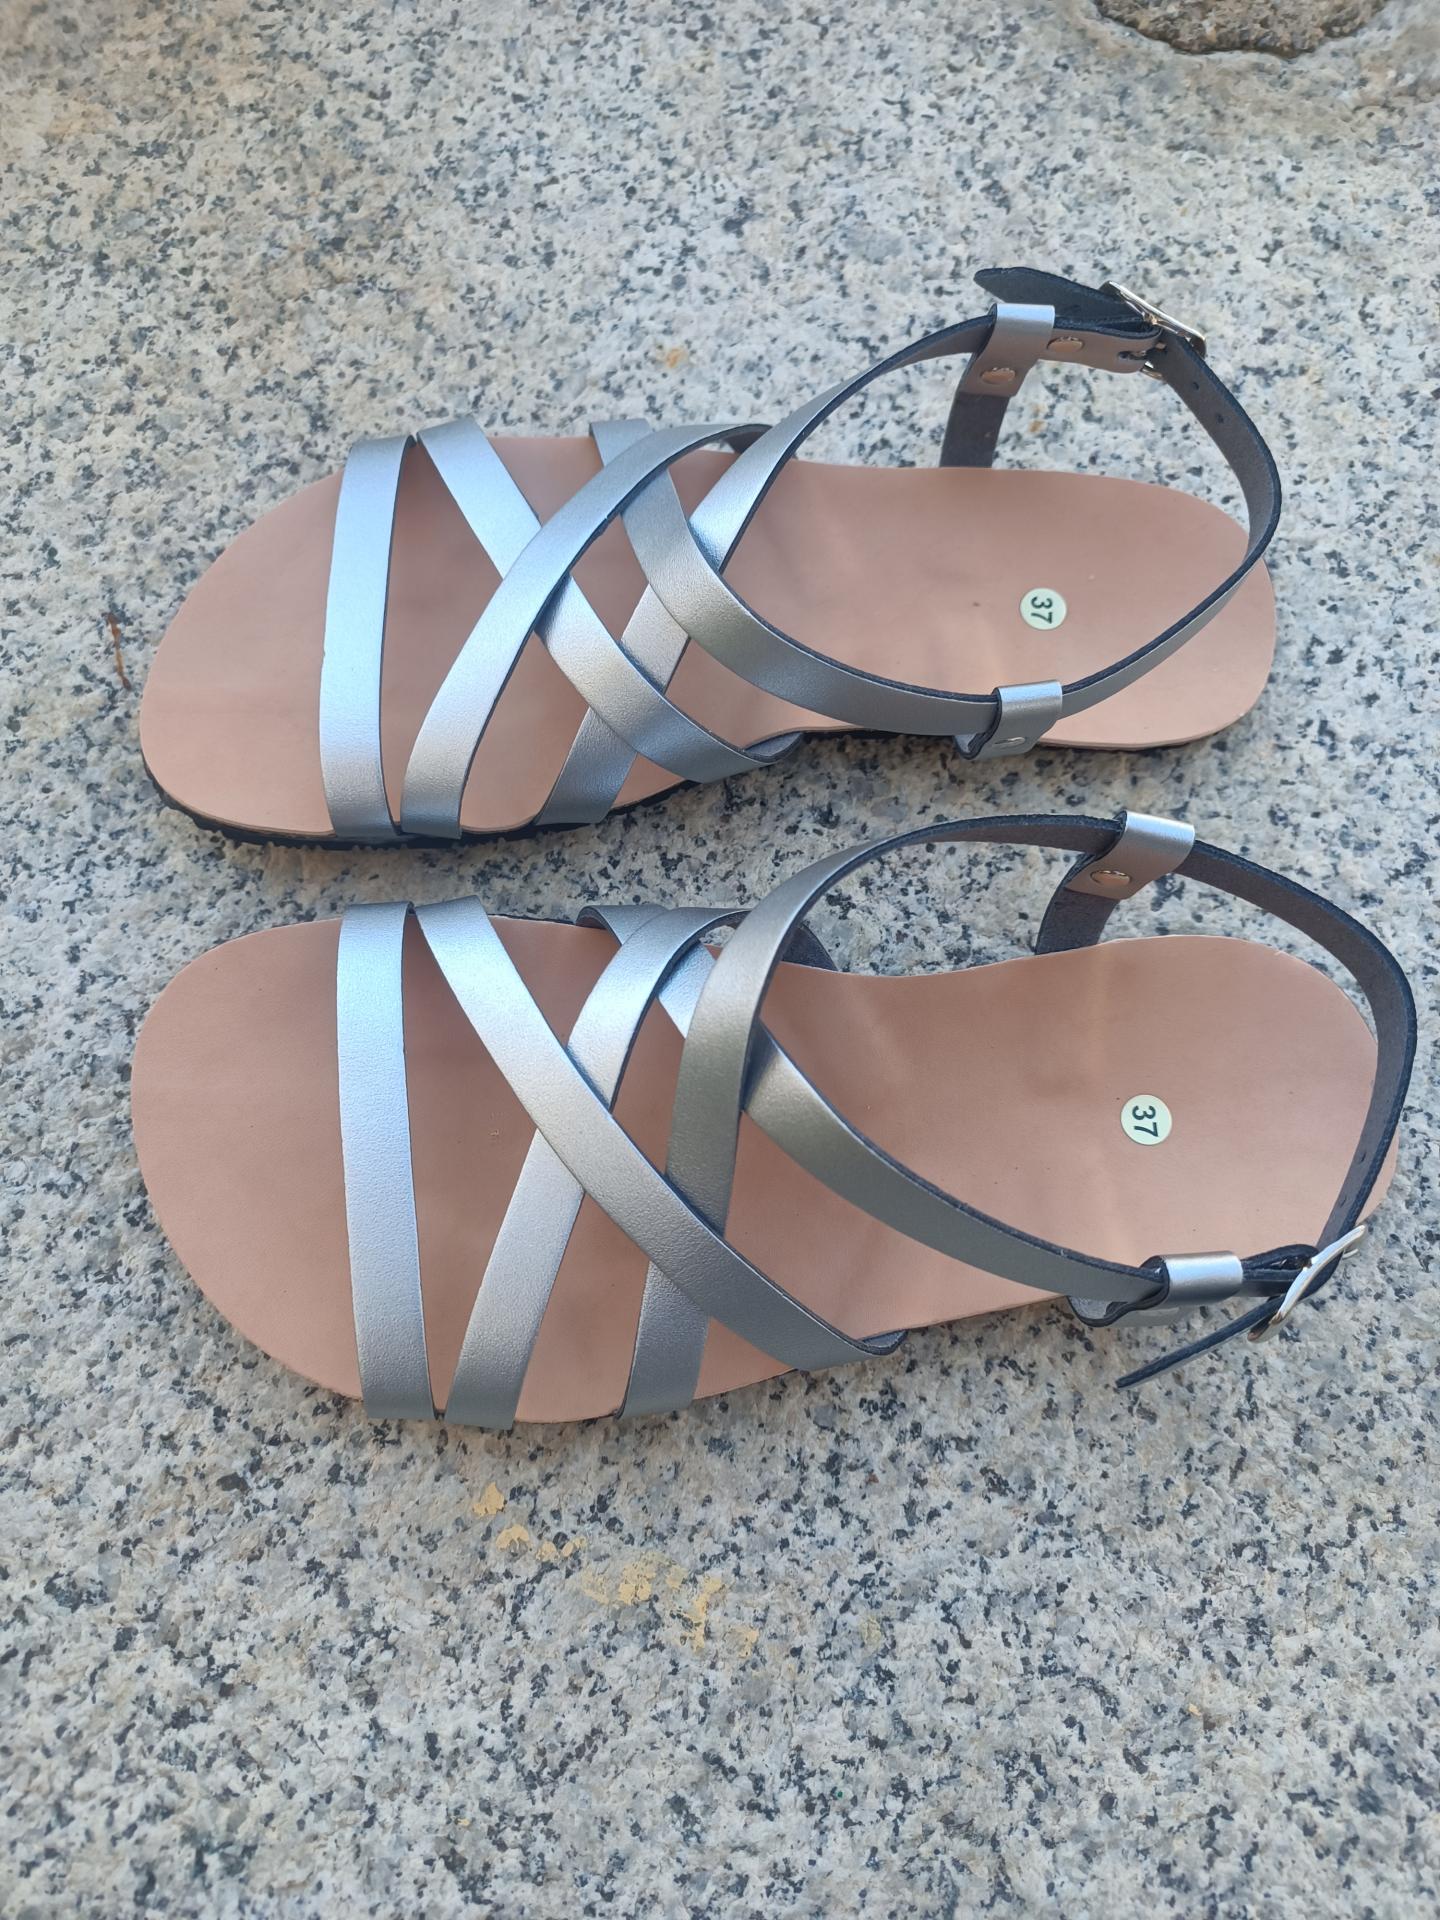 BAREFOOT DELFOS color Plata, sandalias para mujer y hombre, calzado descalzo, sandalias veganas, eco-friendly, barefoot.